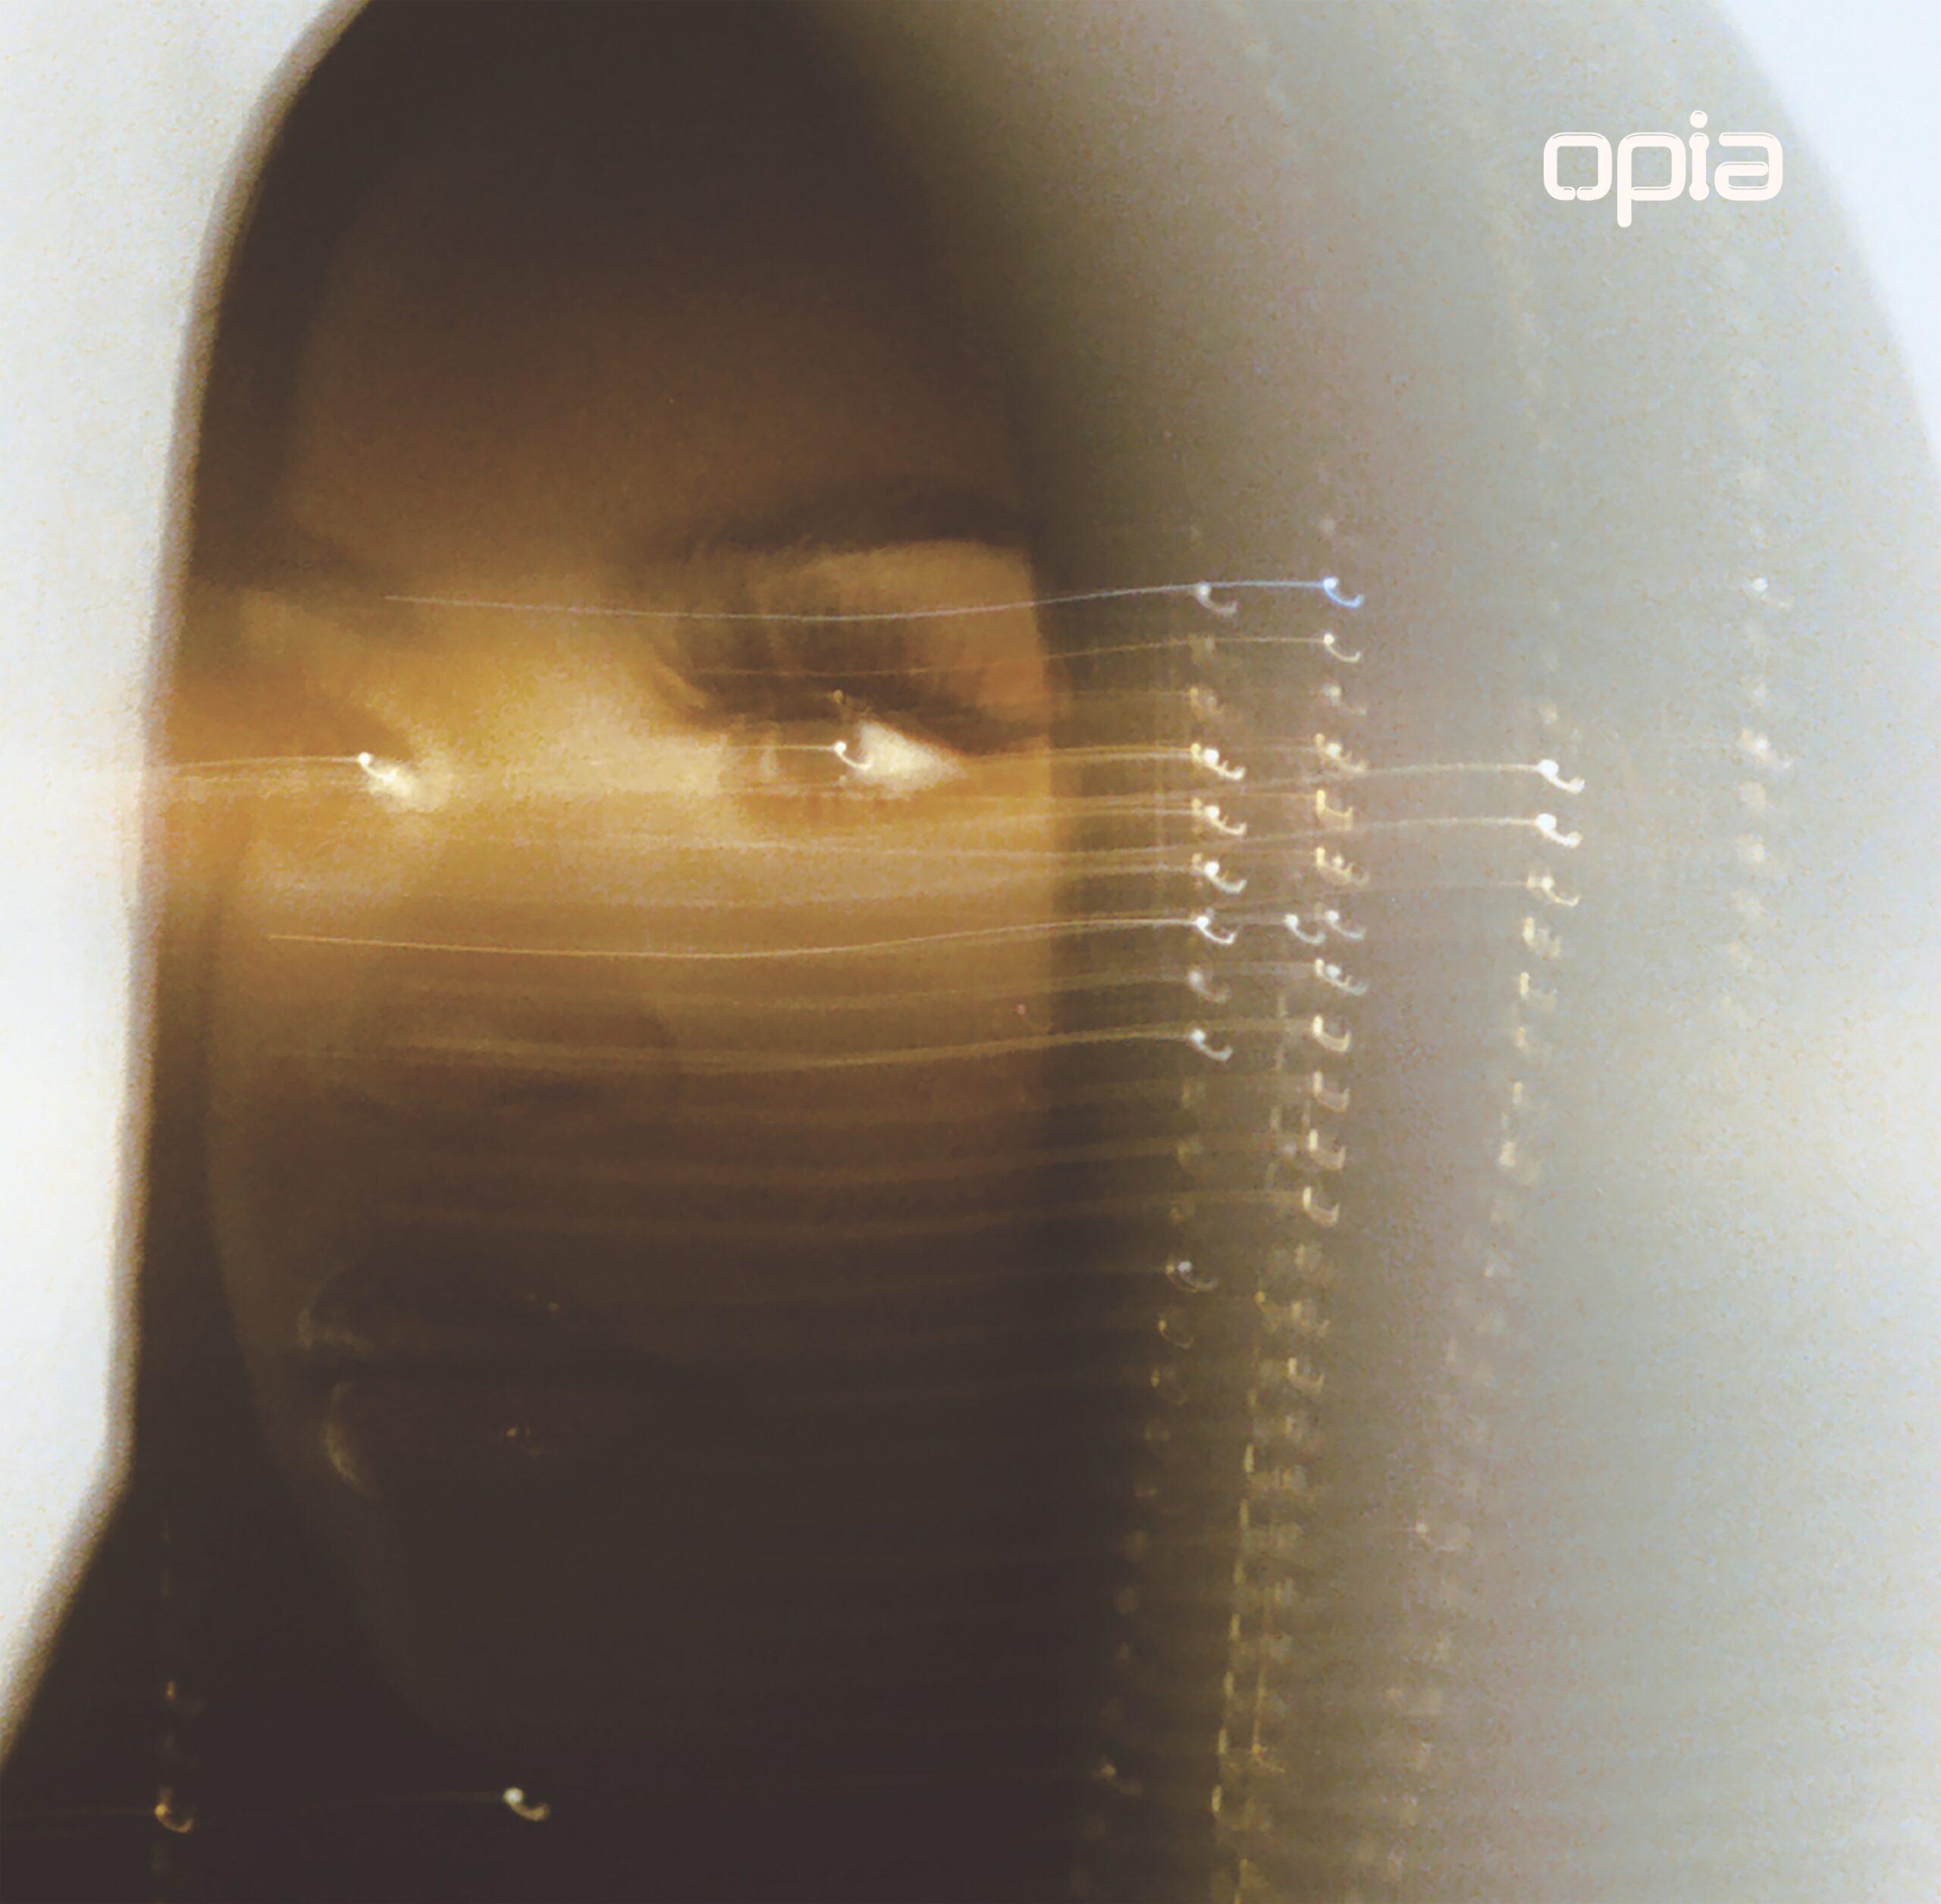 New Music: Savannah Ré - Opia (EP)